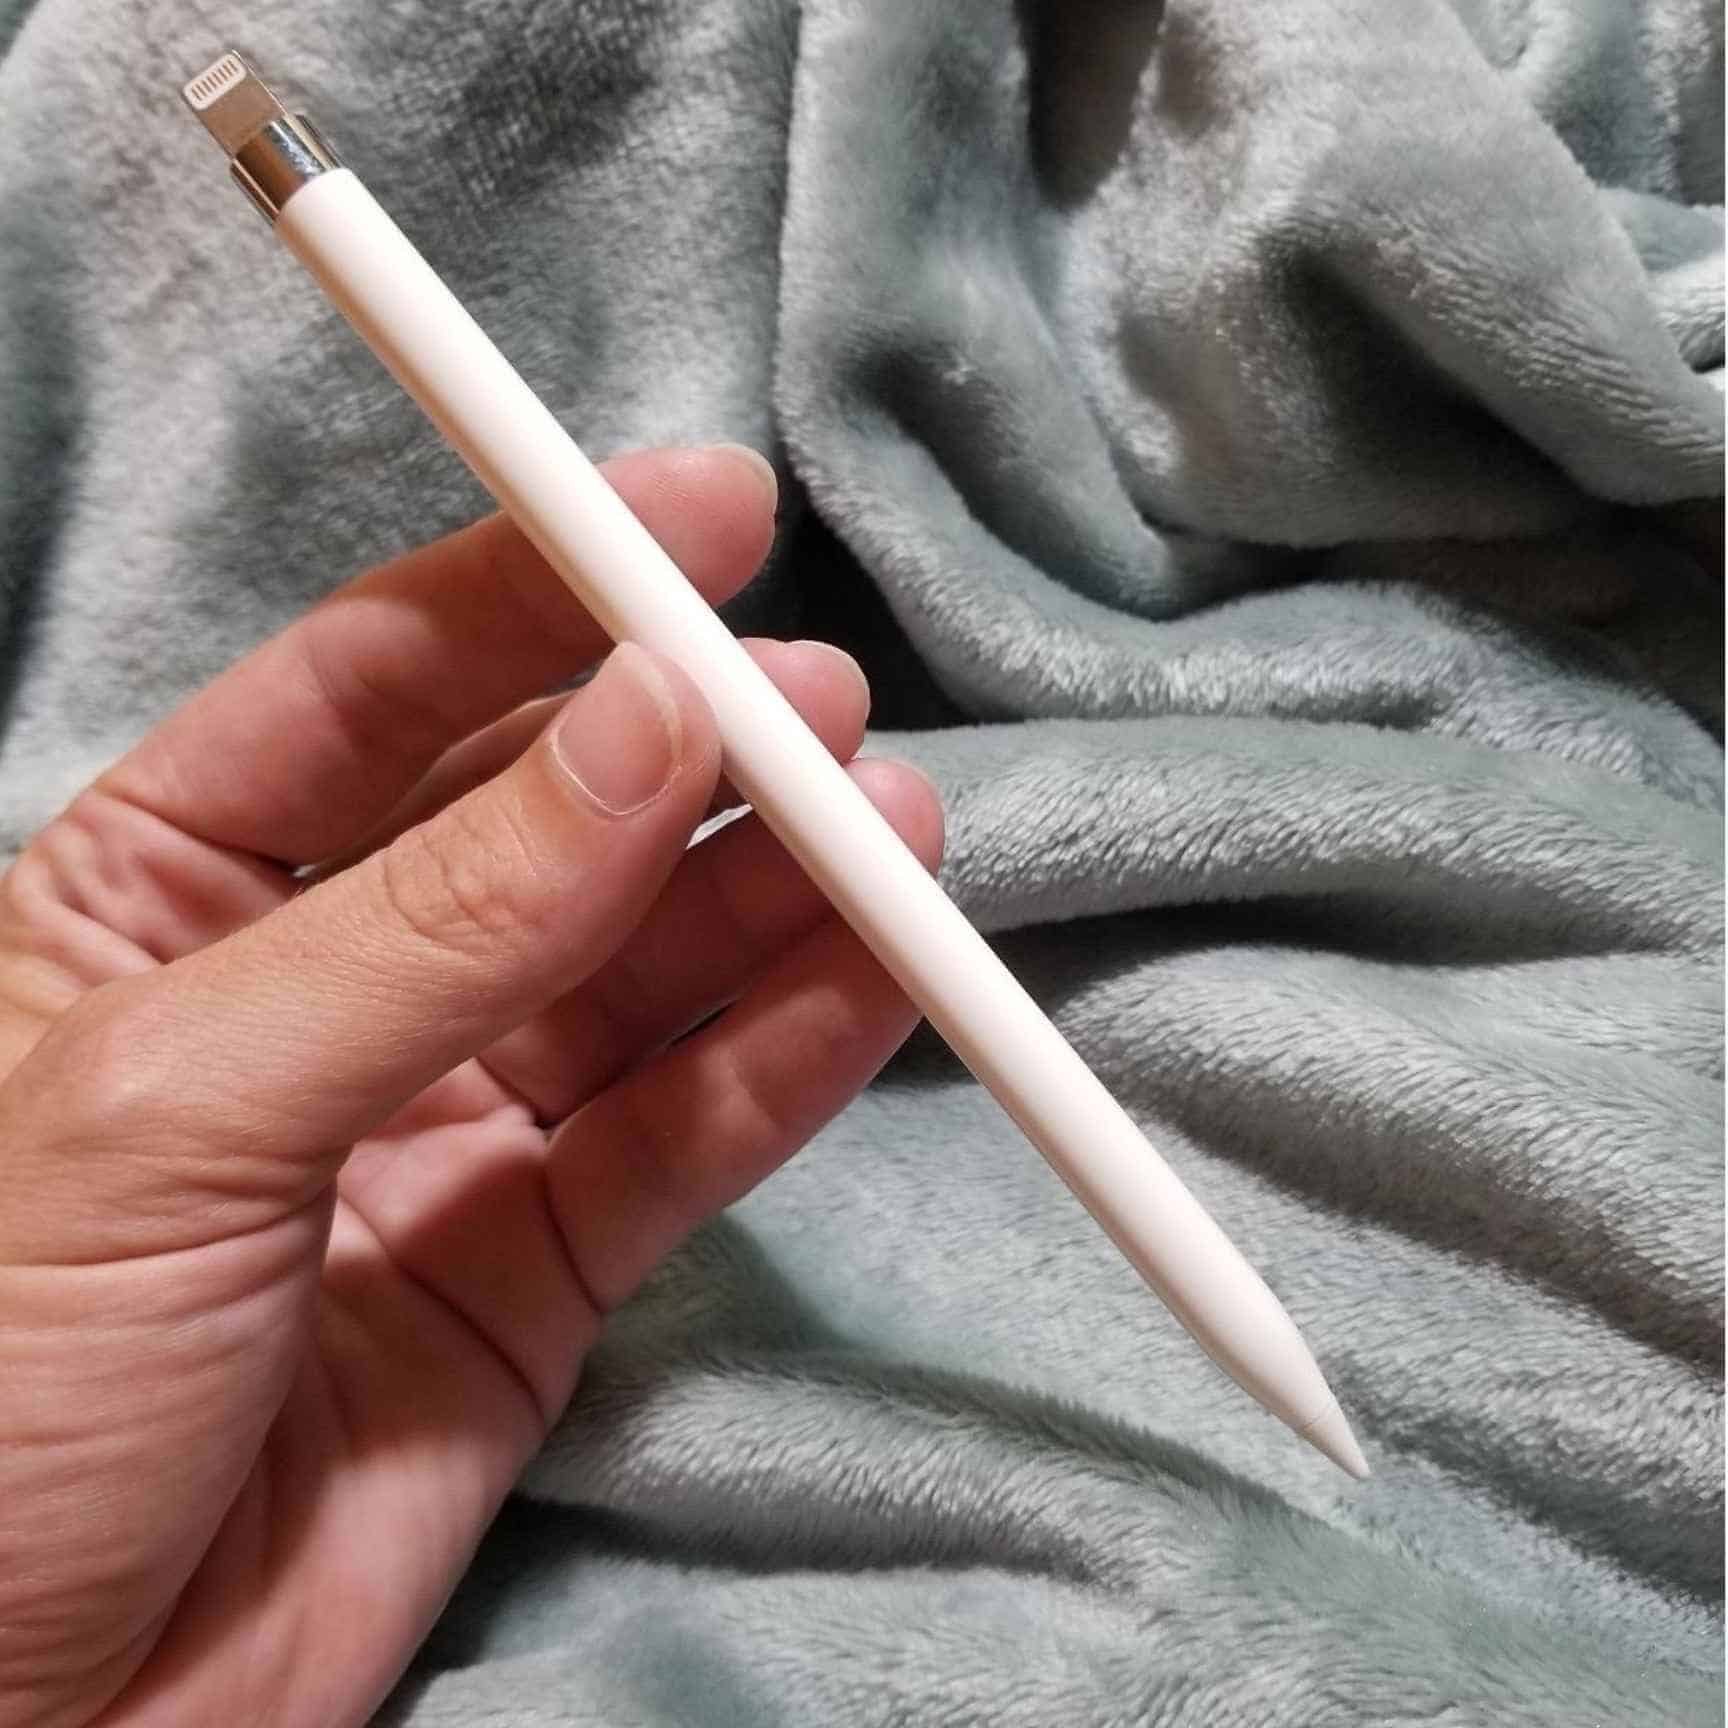 apple pencil tips